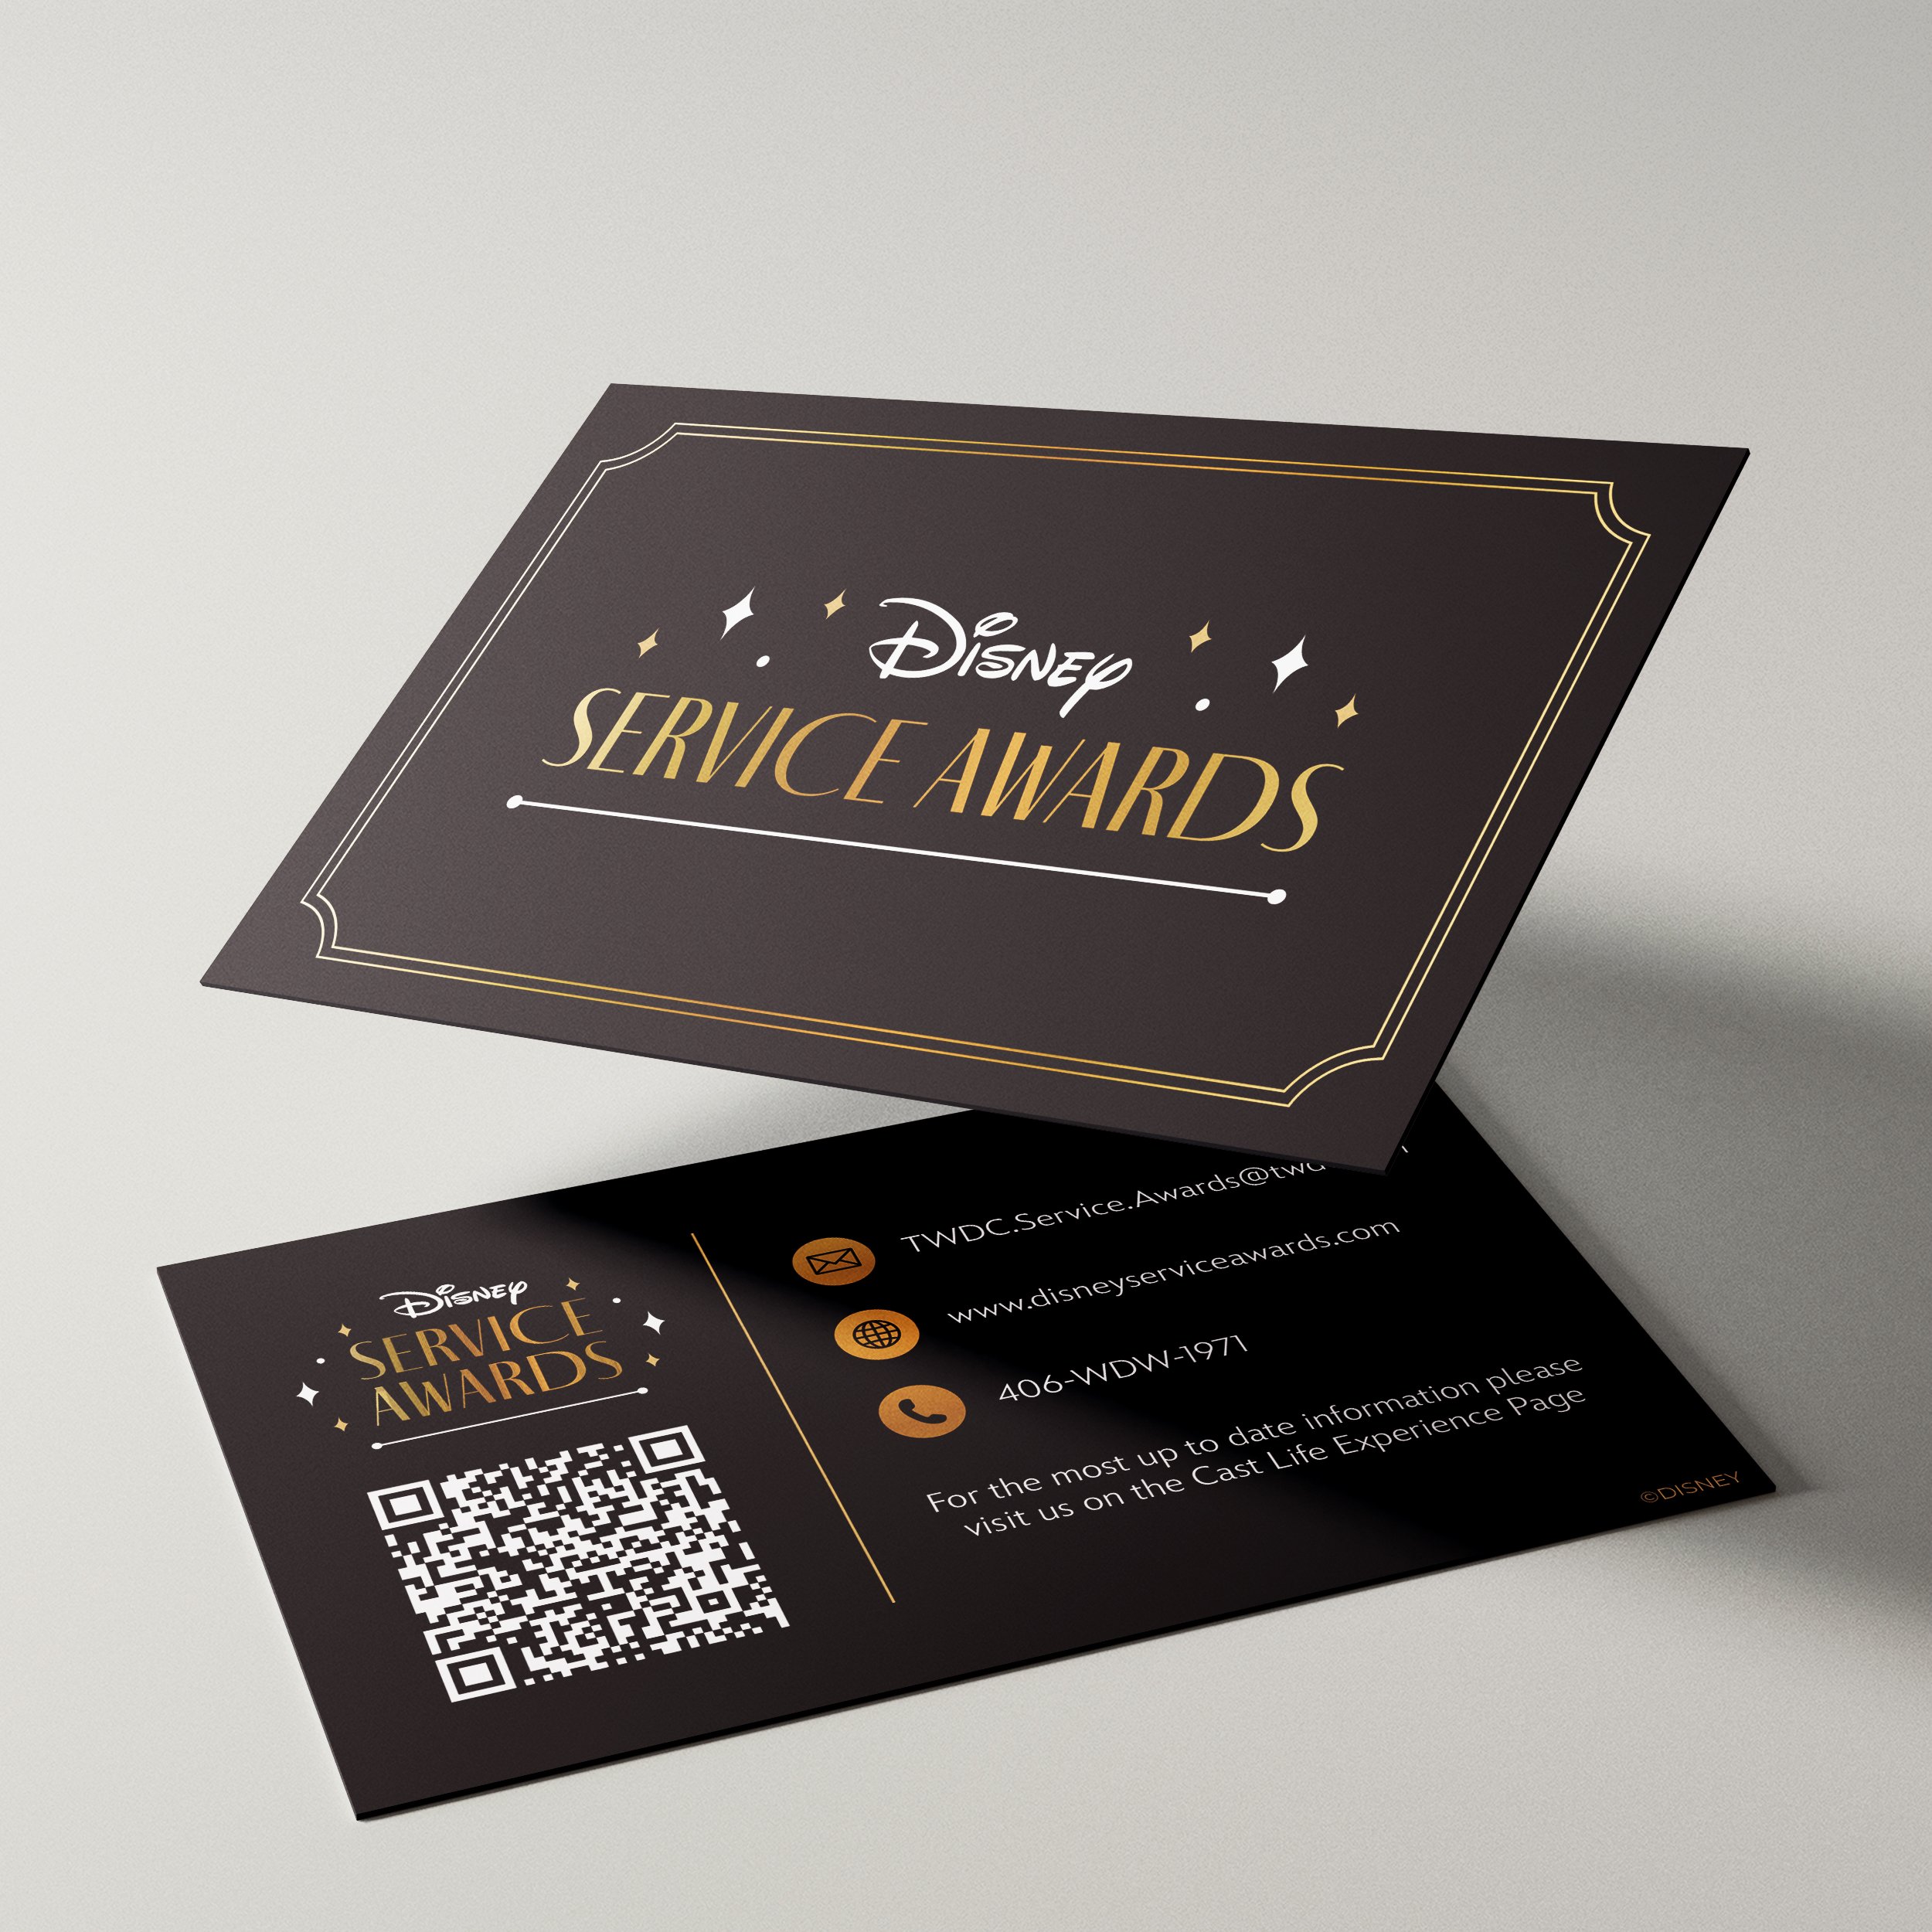 Service Awards Business Card 3.jpg